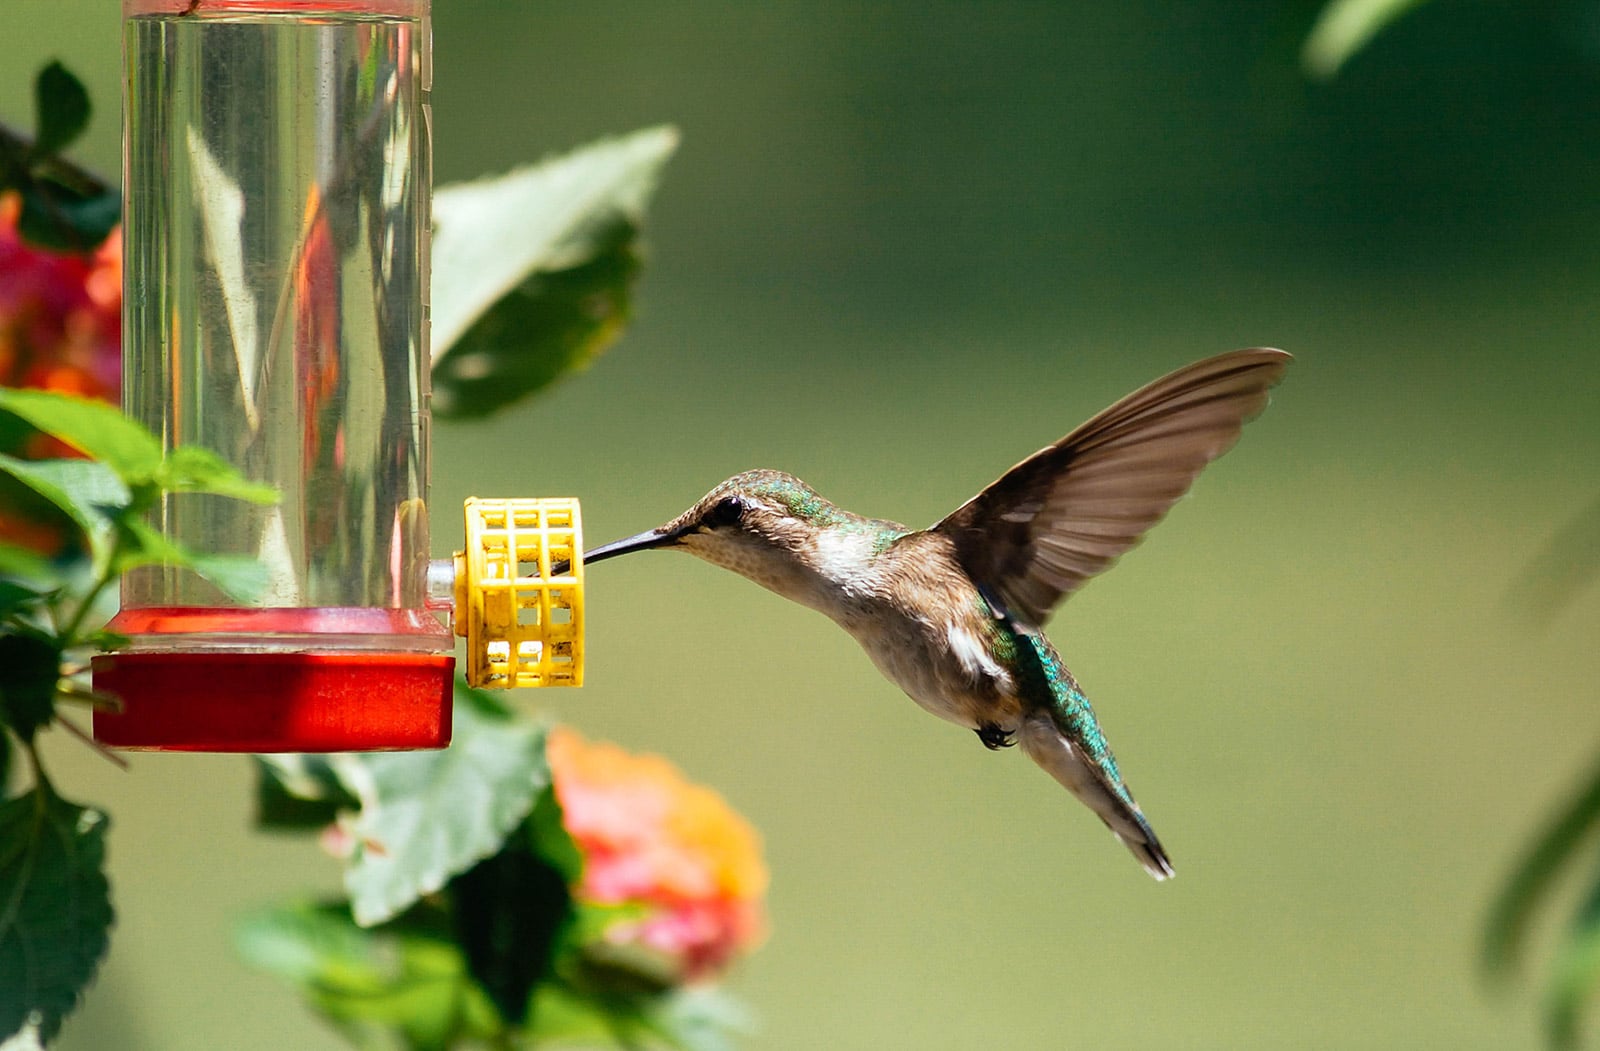 Hummingbird feeding from a hanging feeder in the garden